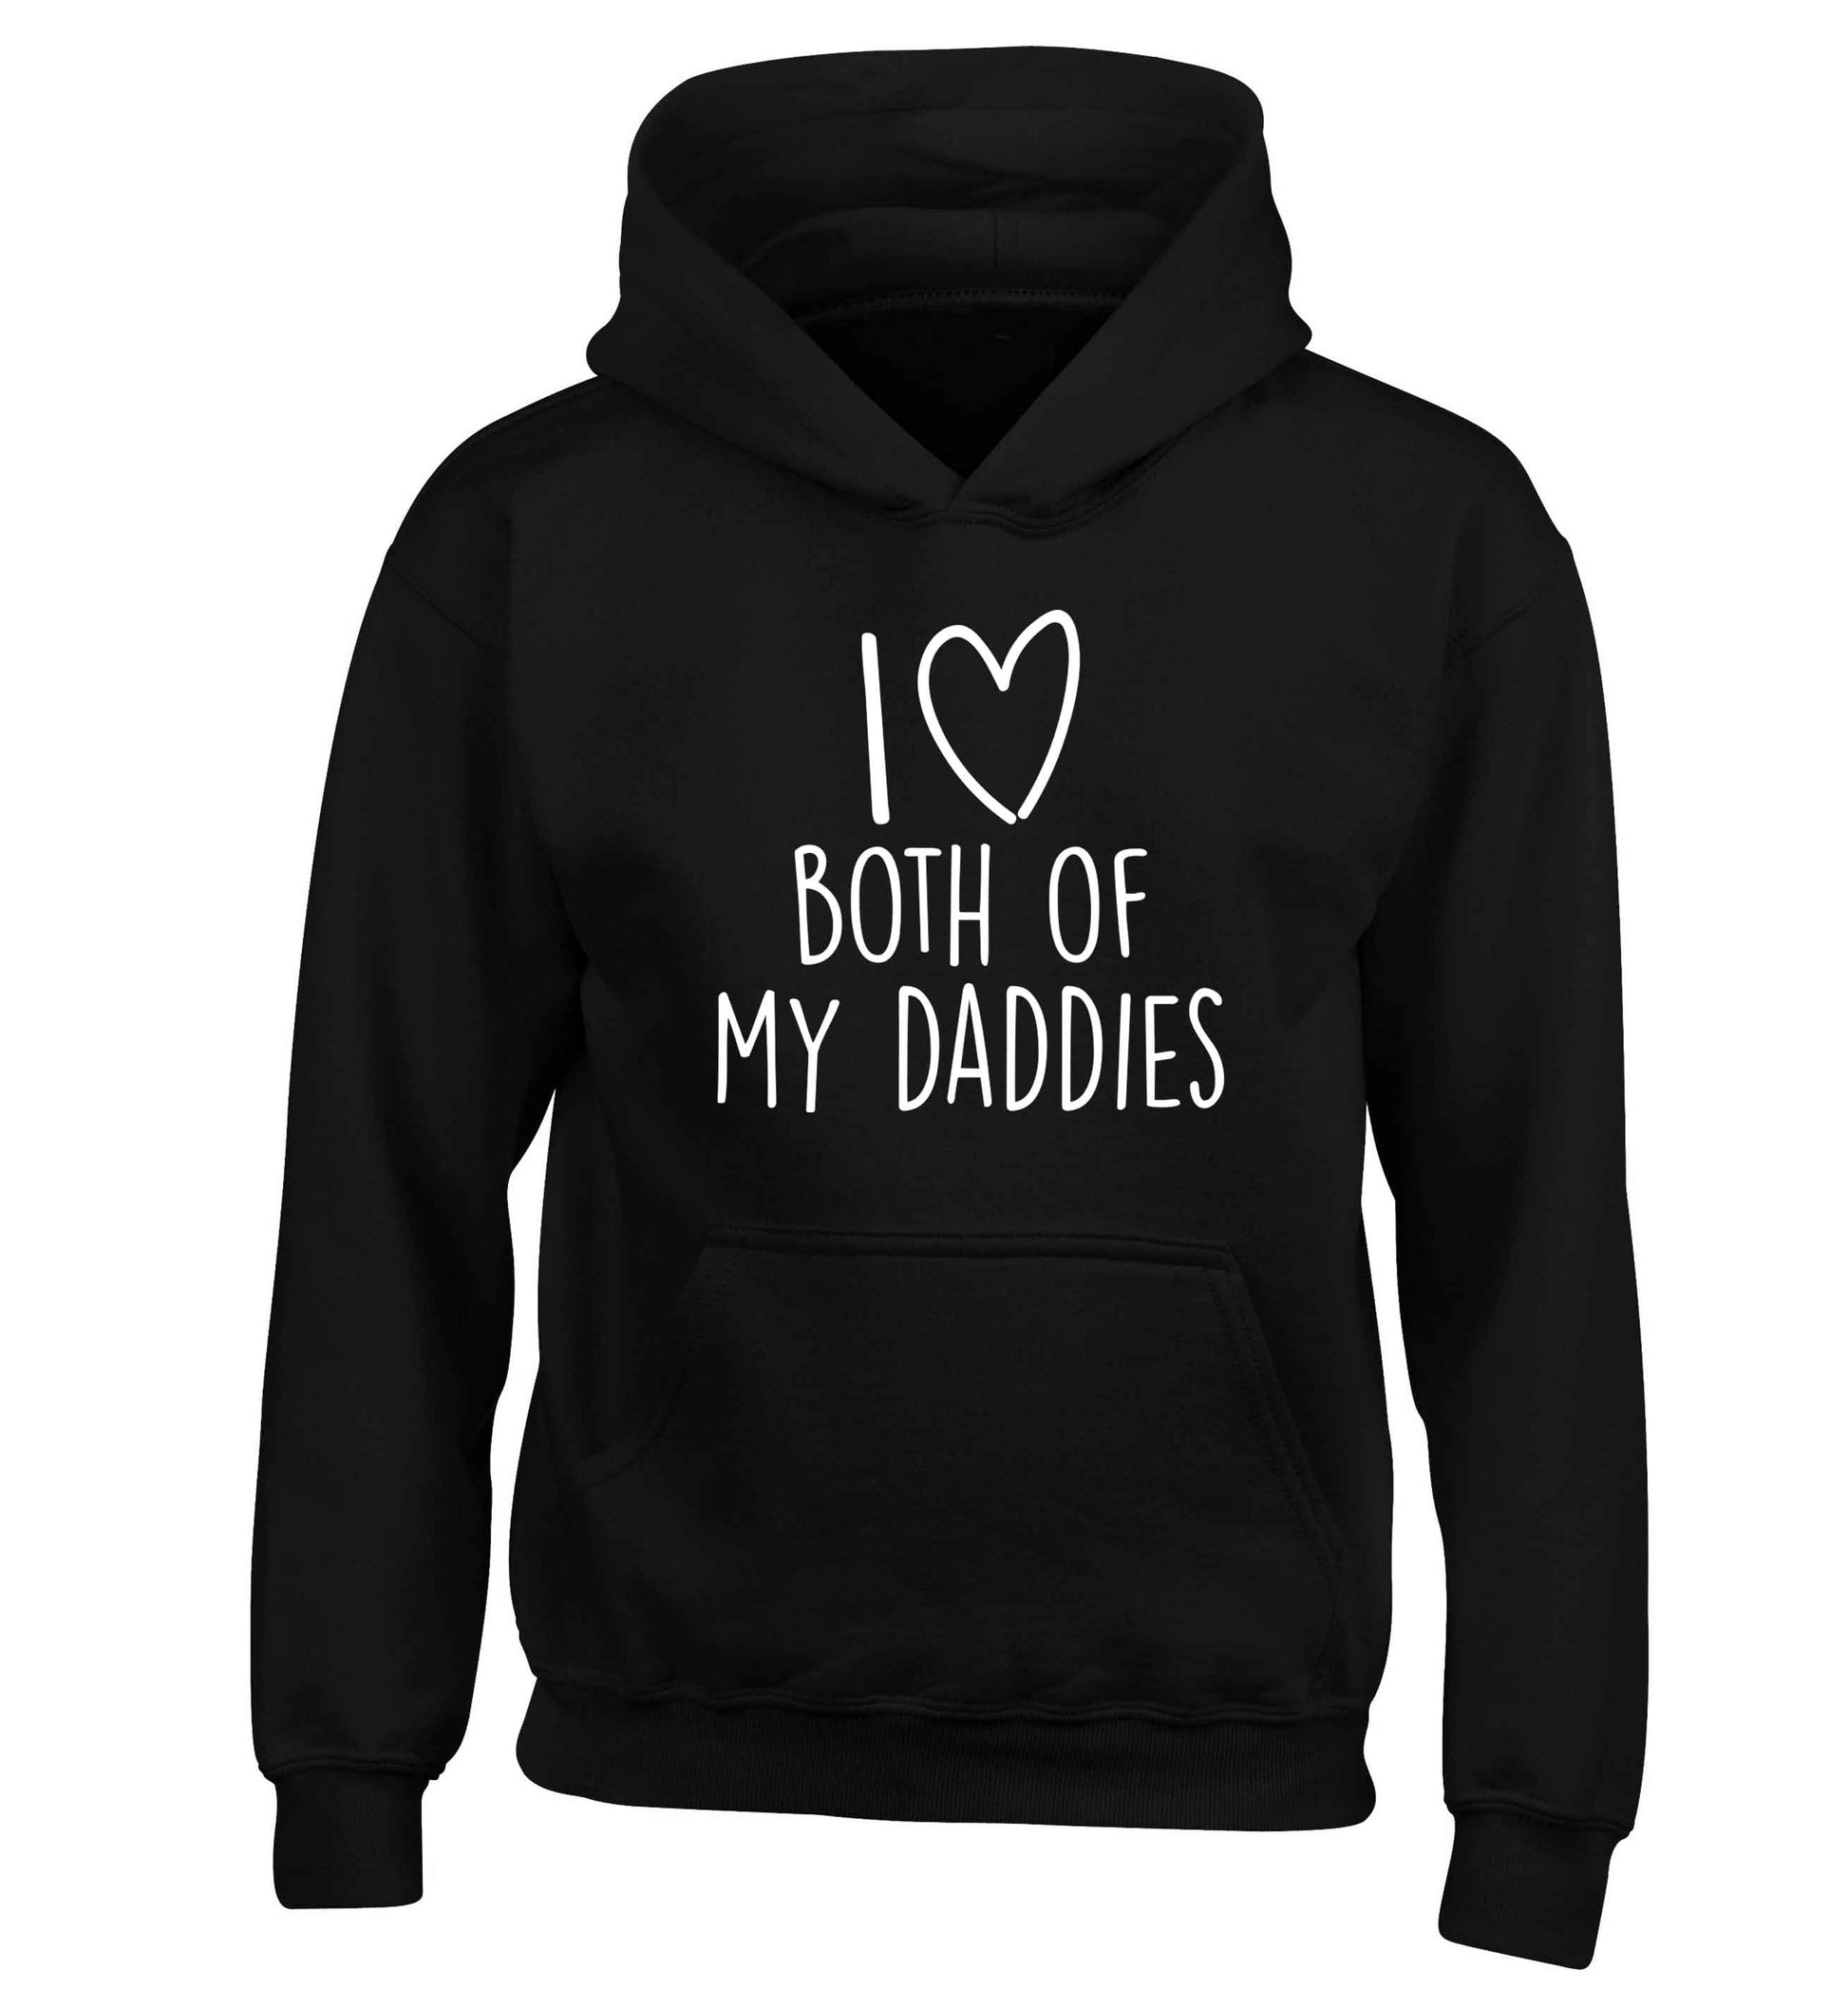 I love both of my daddies children's black hoodie 12-13 Years